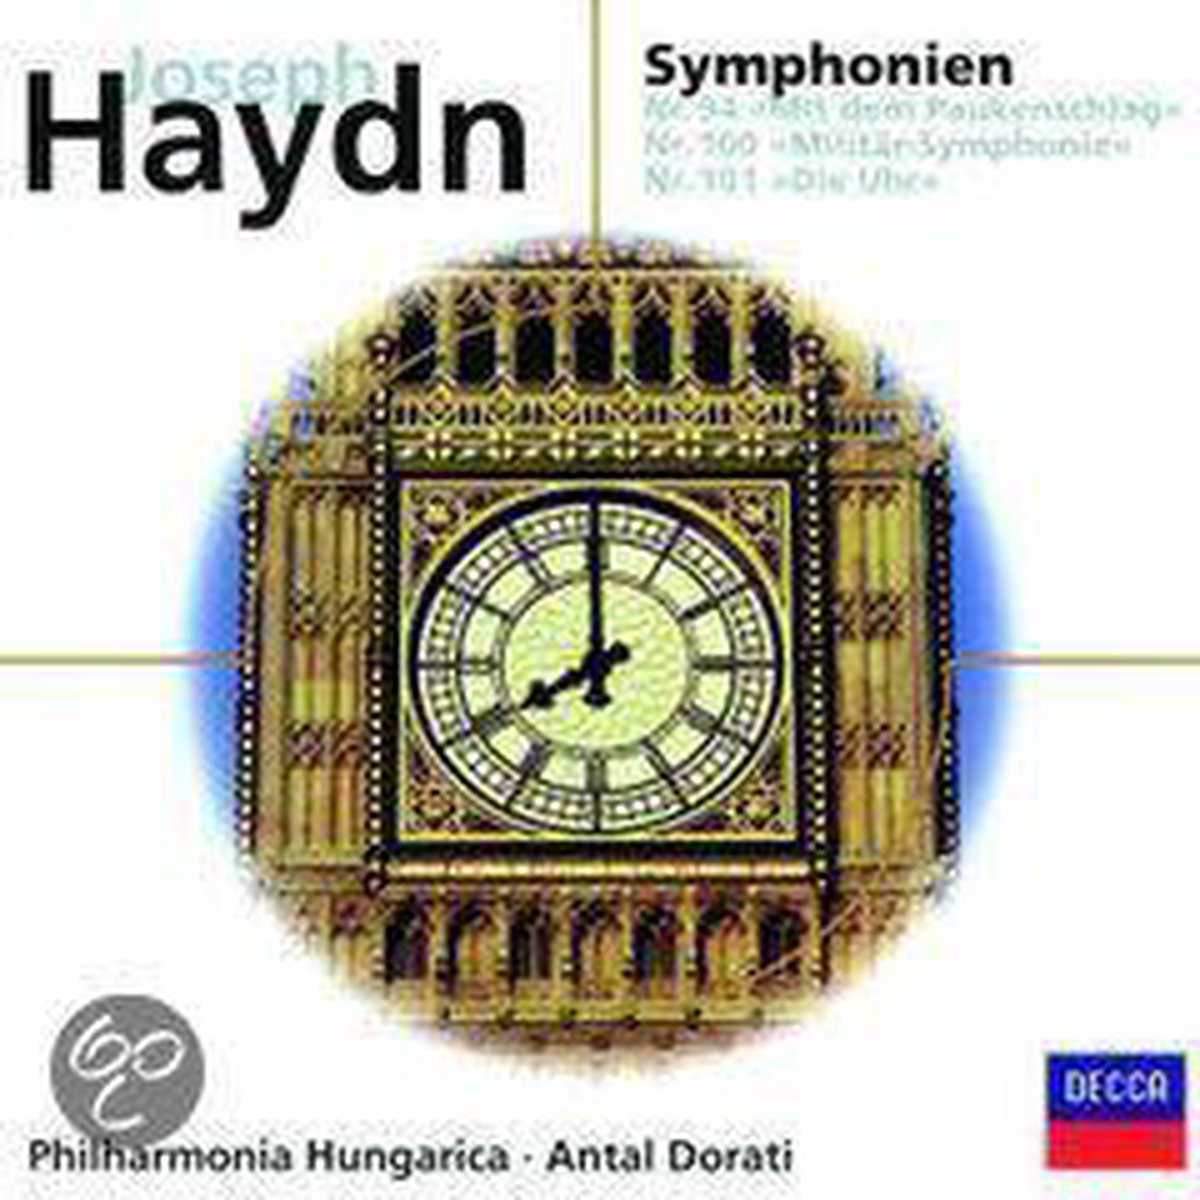 Symphonien No. 94, 100 & - Joseph Haydn